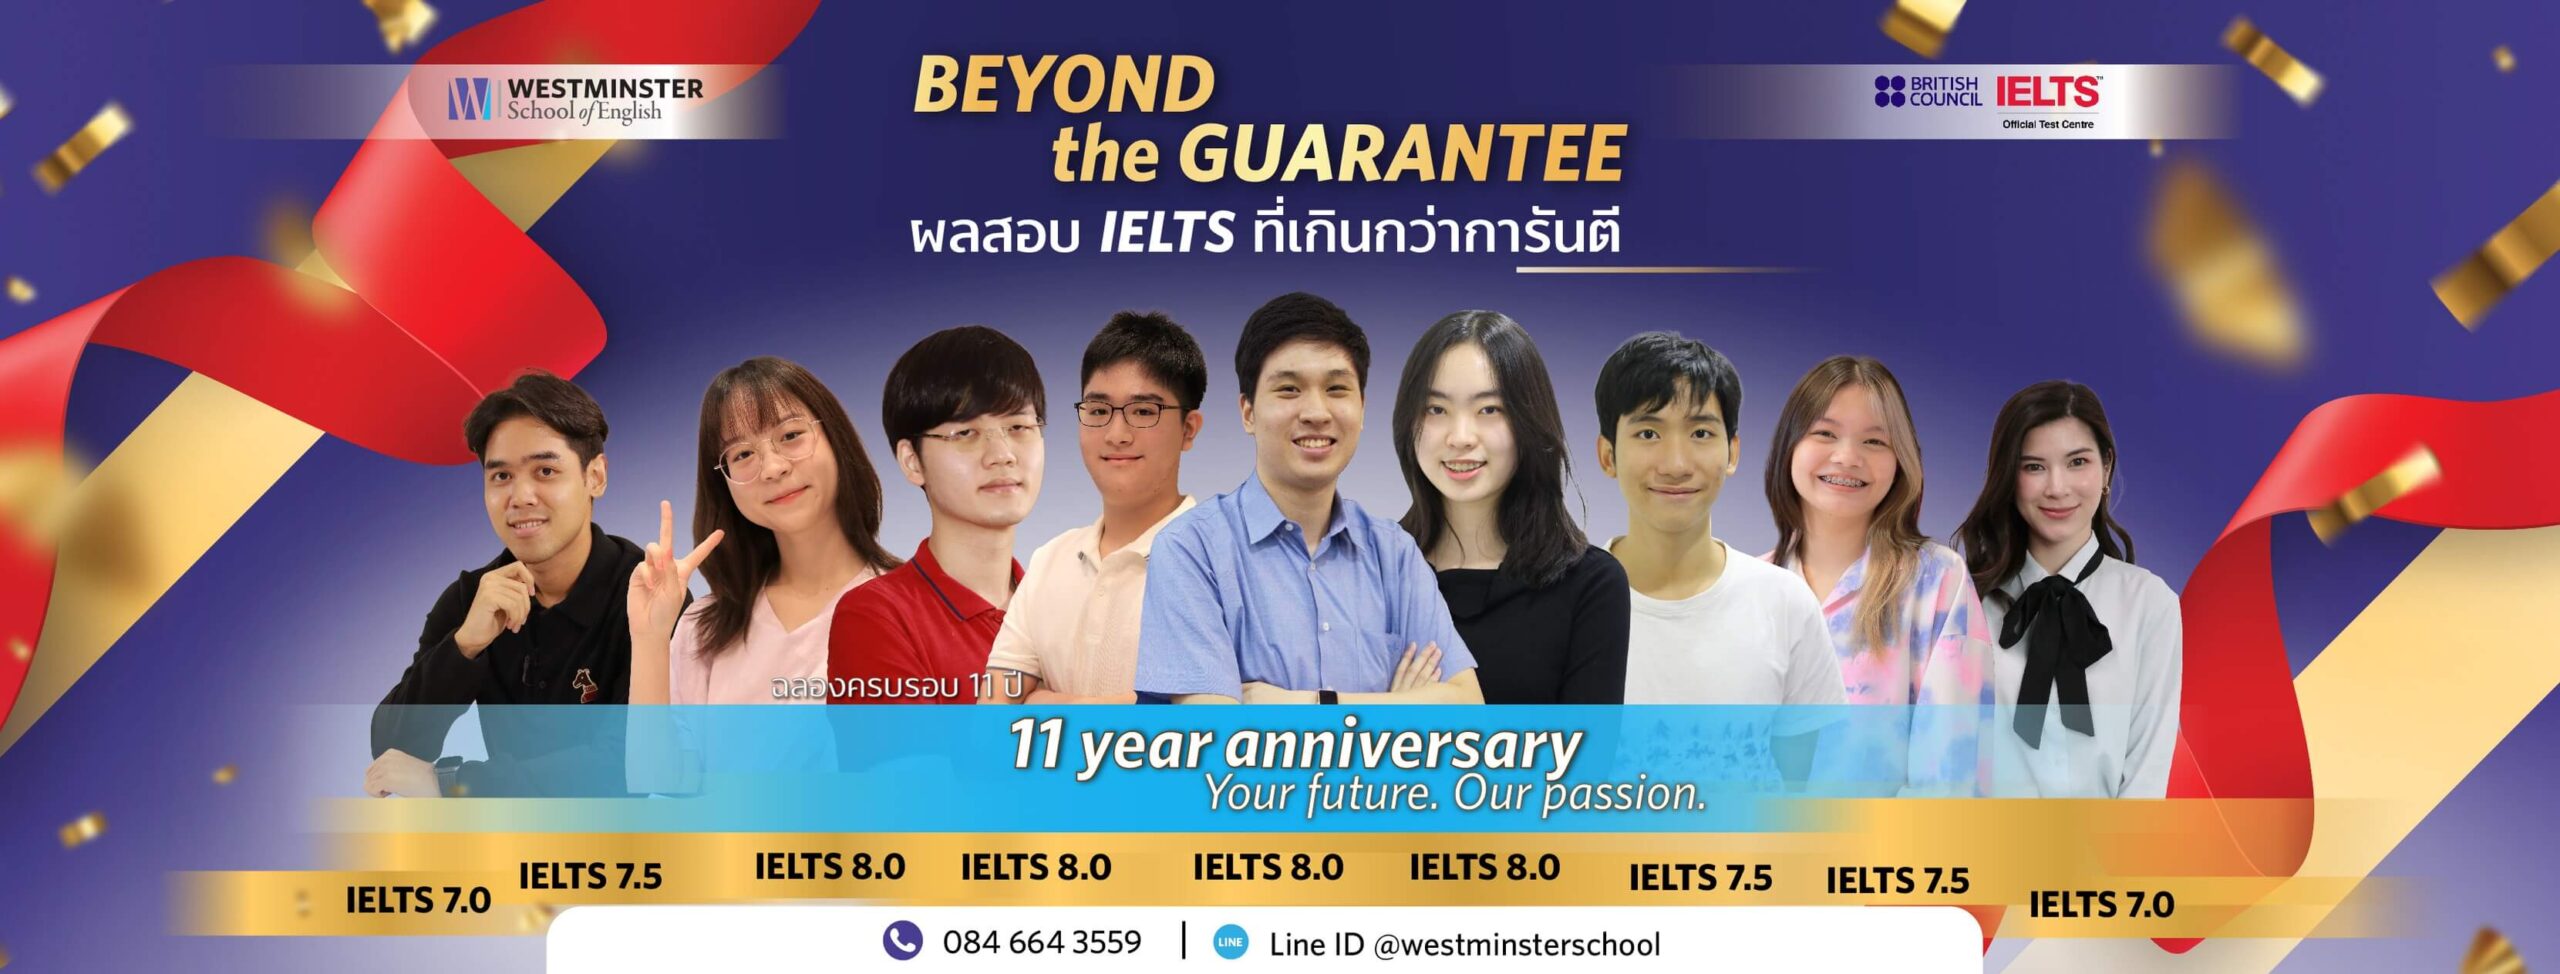 Westminster โรงเรียนสอน IELTS ดีที่สุดในไทย